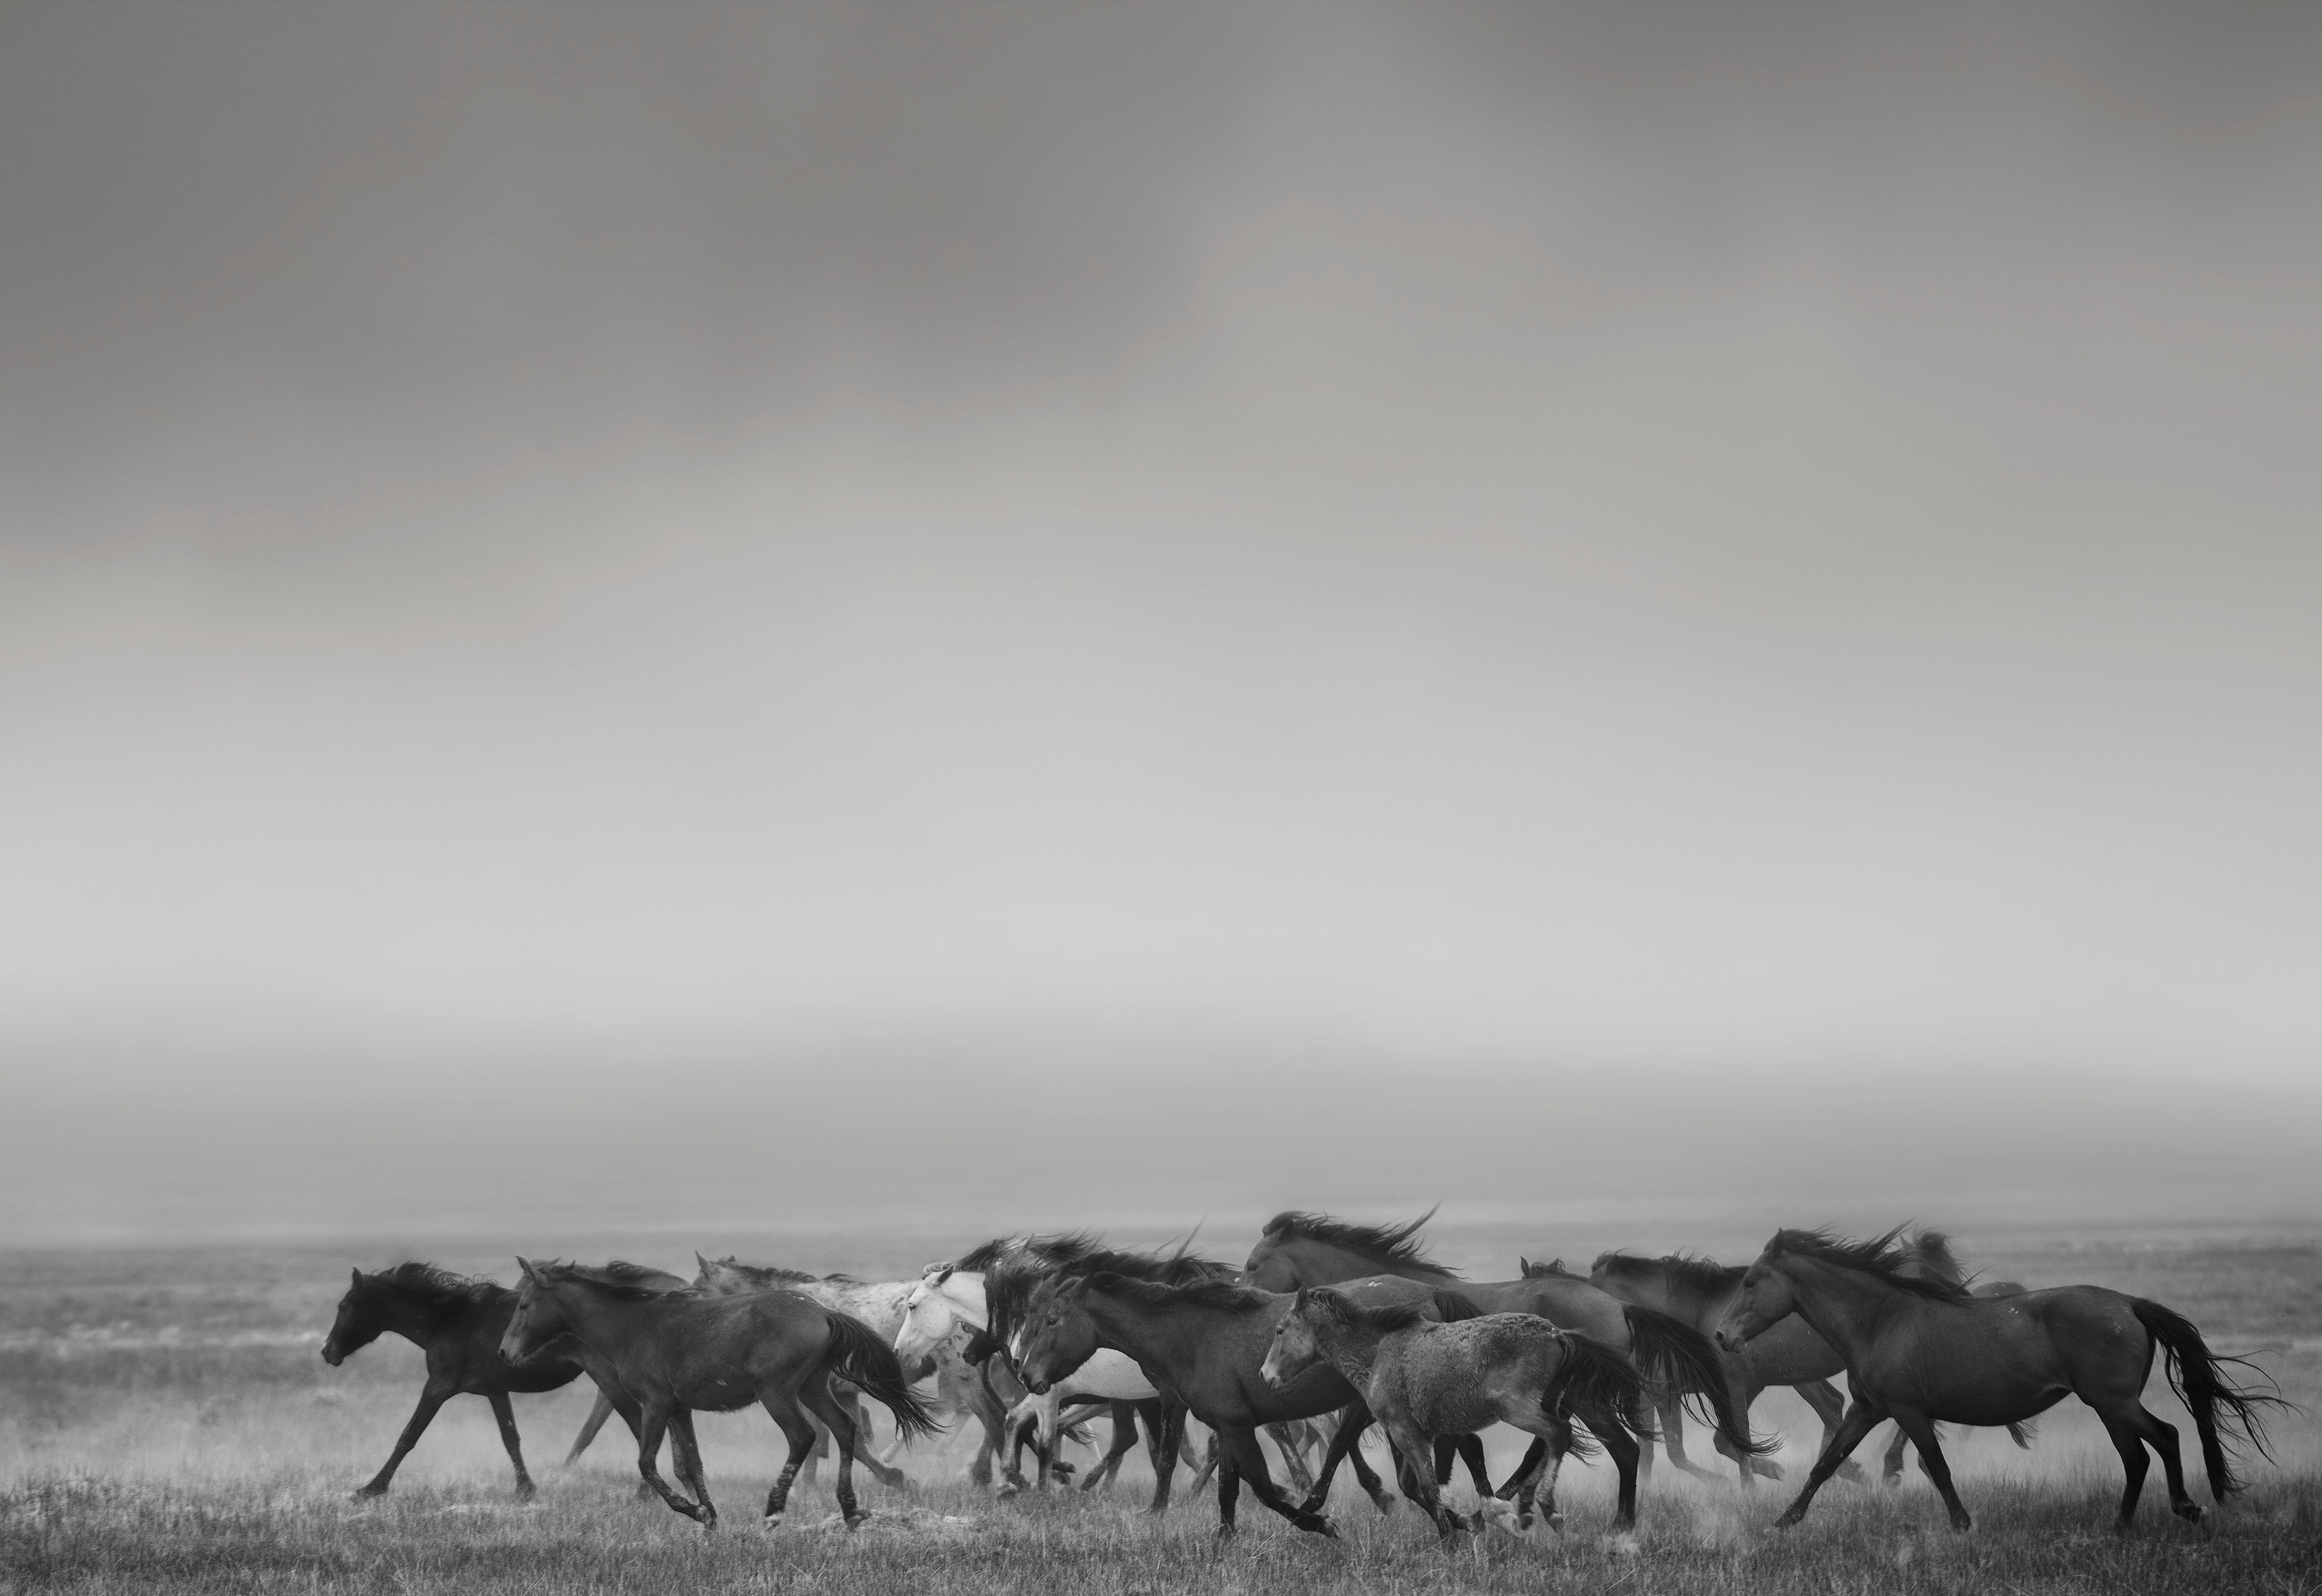 Black and White Photograph Shane Russeck - "Dream State" - 50x90 Photographie en noir et blanc Chevaux sauvages Mustangs Non signé